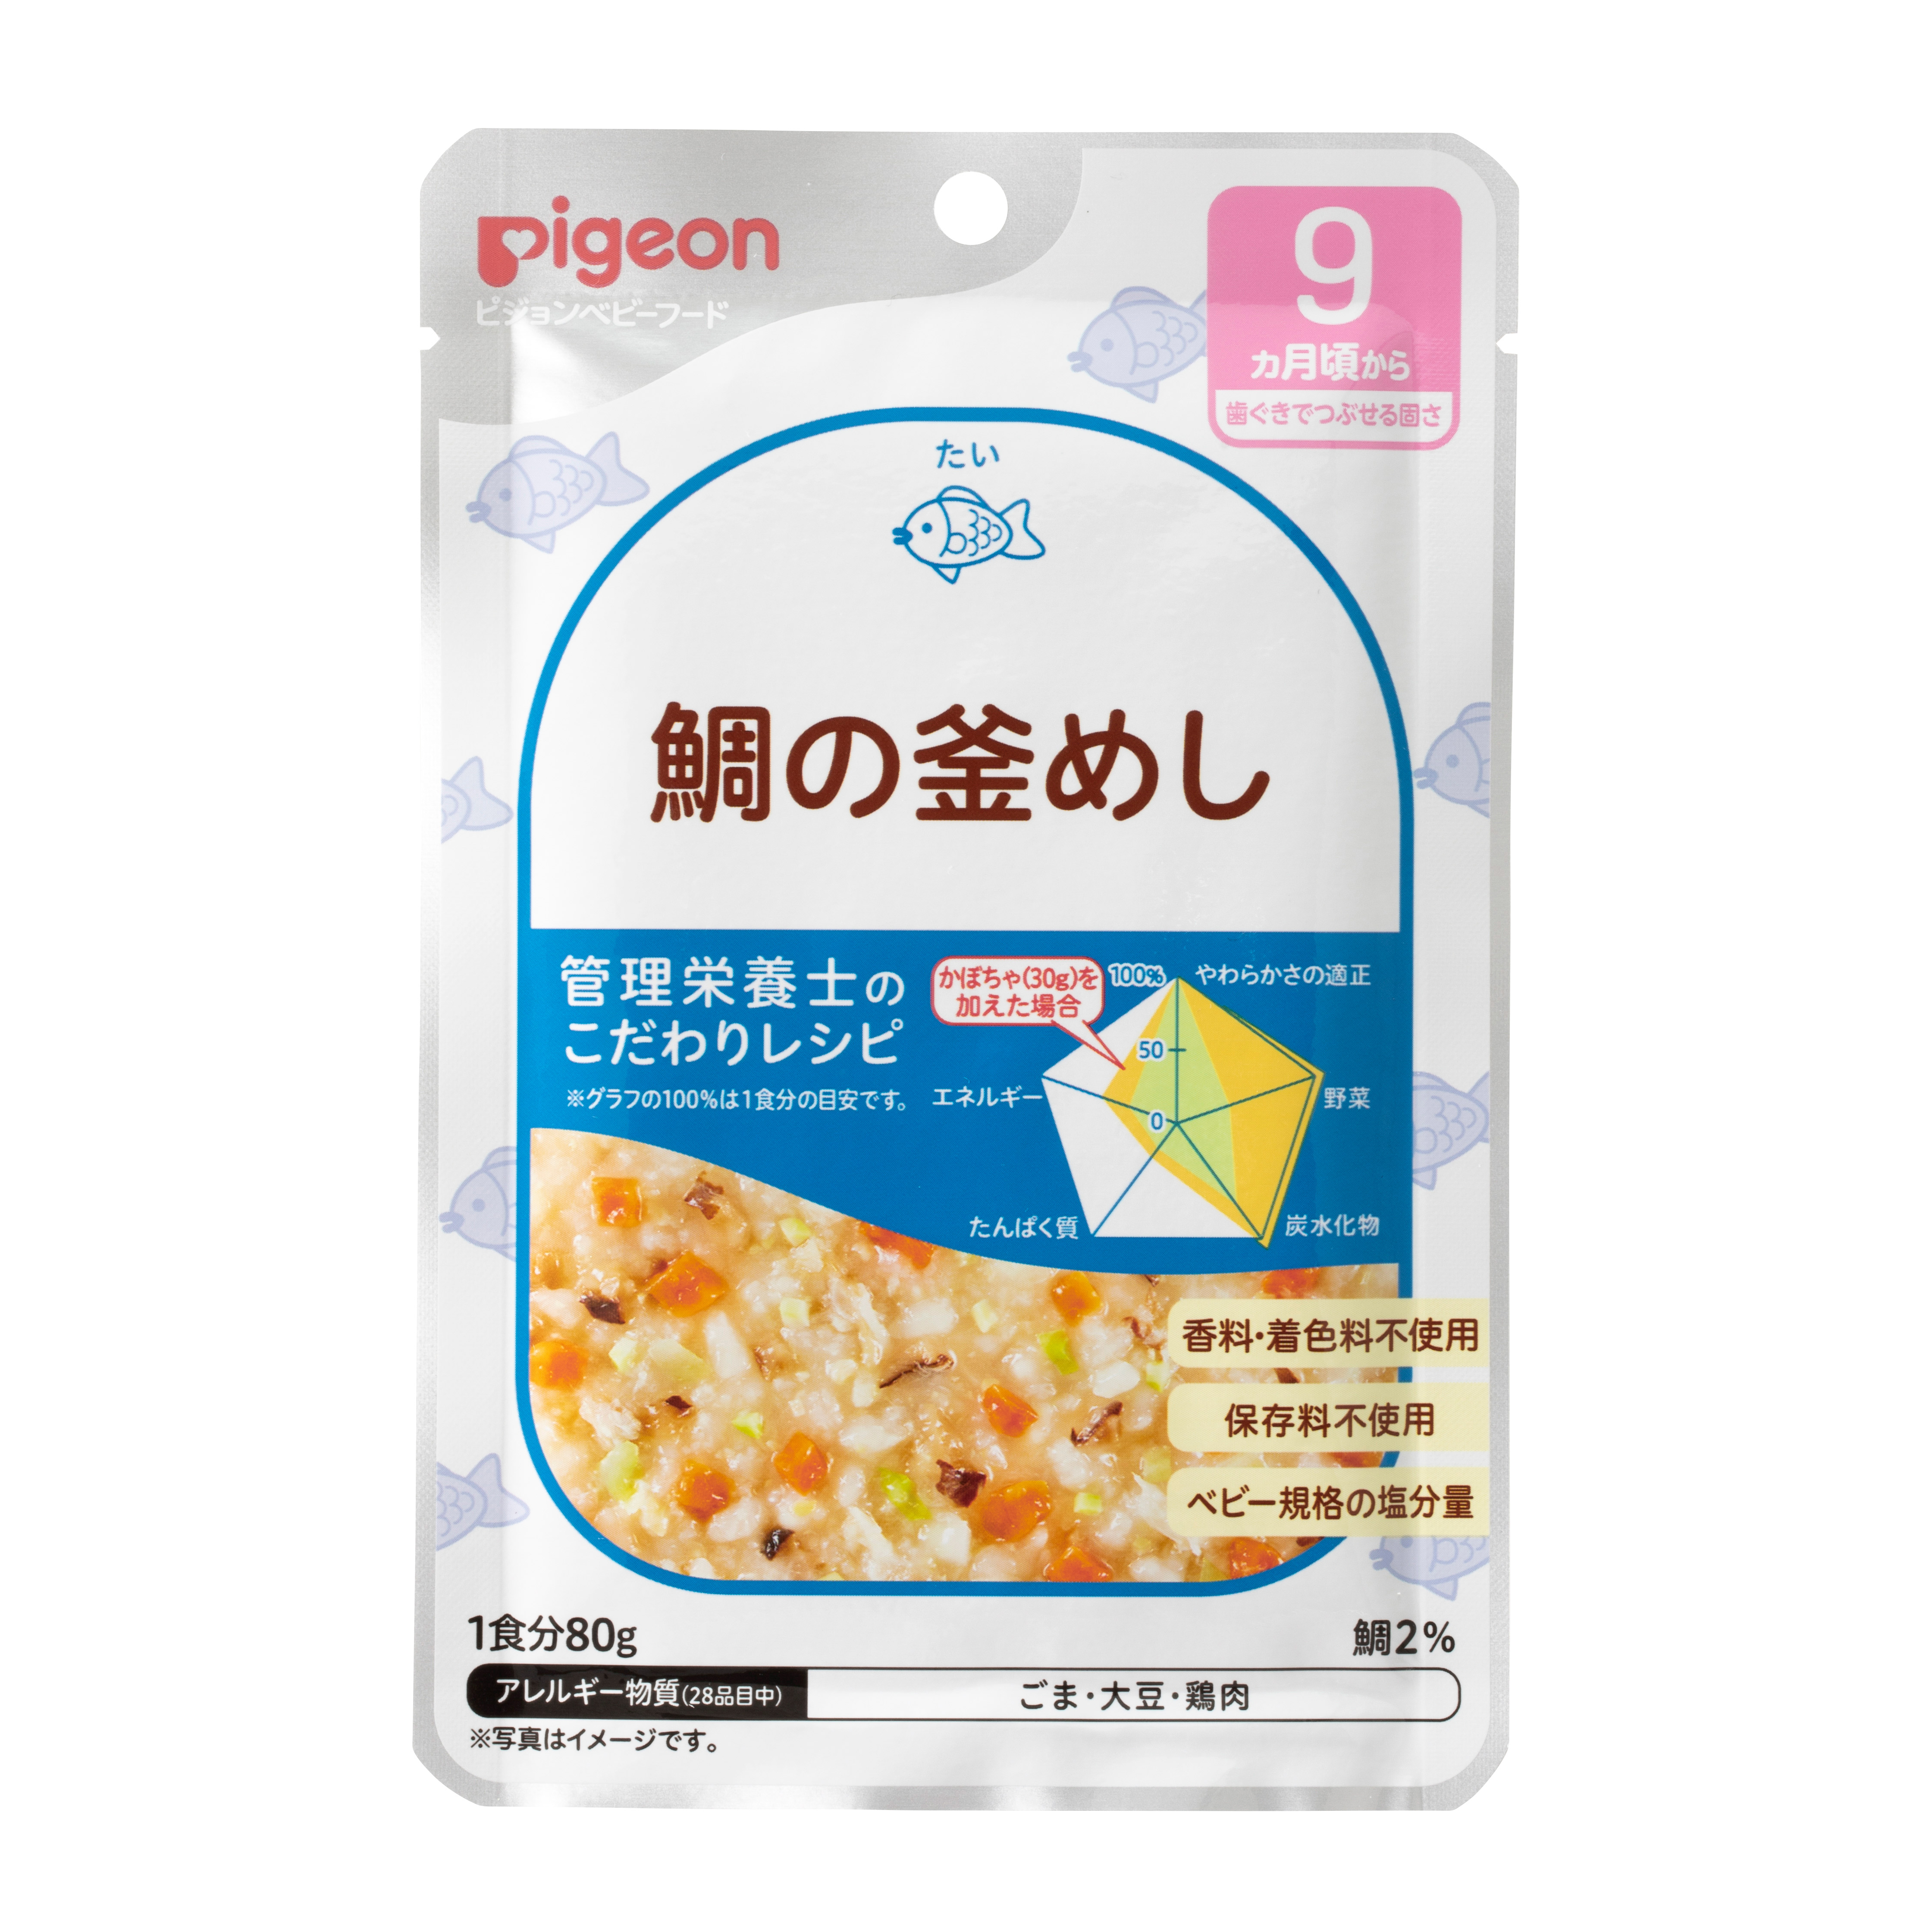 Pigeon Retort Baby Food Sea Bream Cooked Rice (PG-1024876)